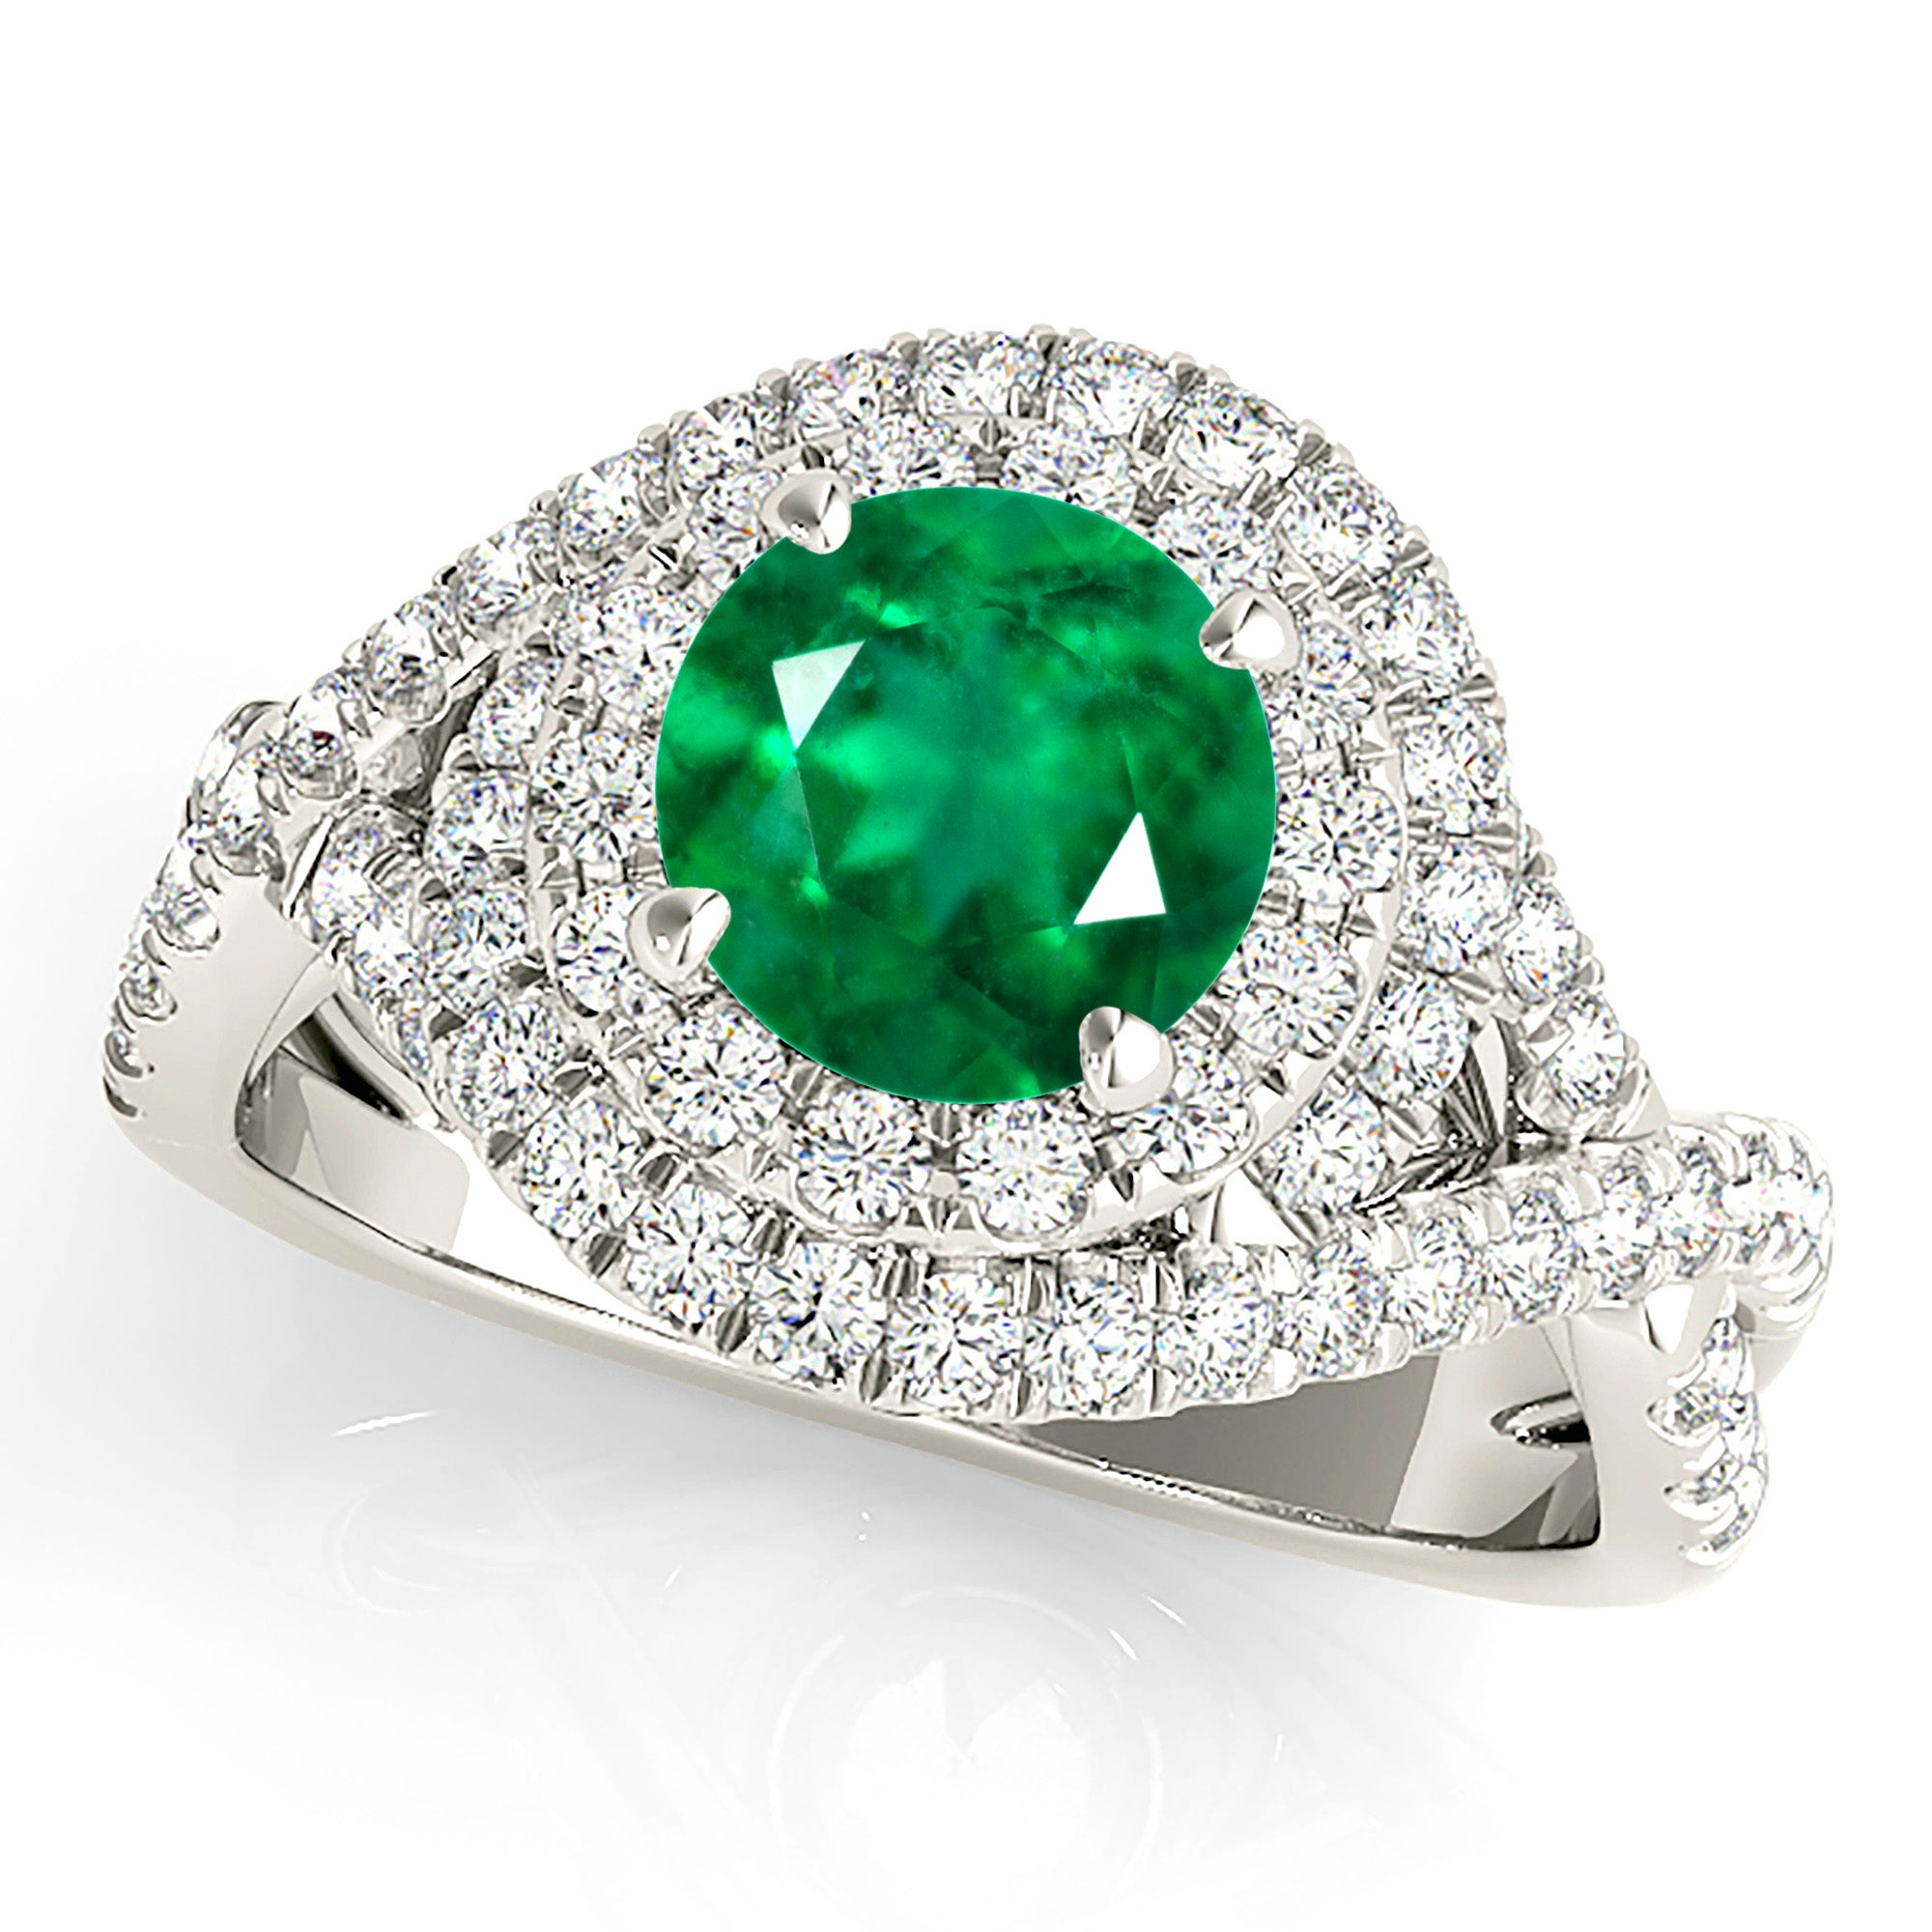 1.14 ct. Genuine Emerald Ring With 0.70 ctw. Diamond Swirl Halo and Twist Diamond Band-in 14K/18K White, Yellow, Rose Gold and Platinum - Christmas Jewelry Gift -VIRABYANI